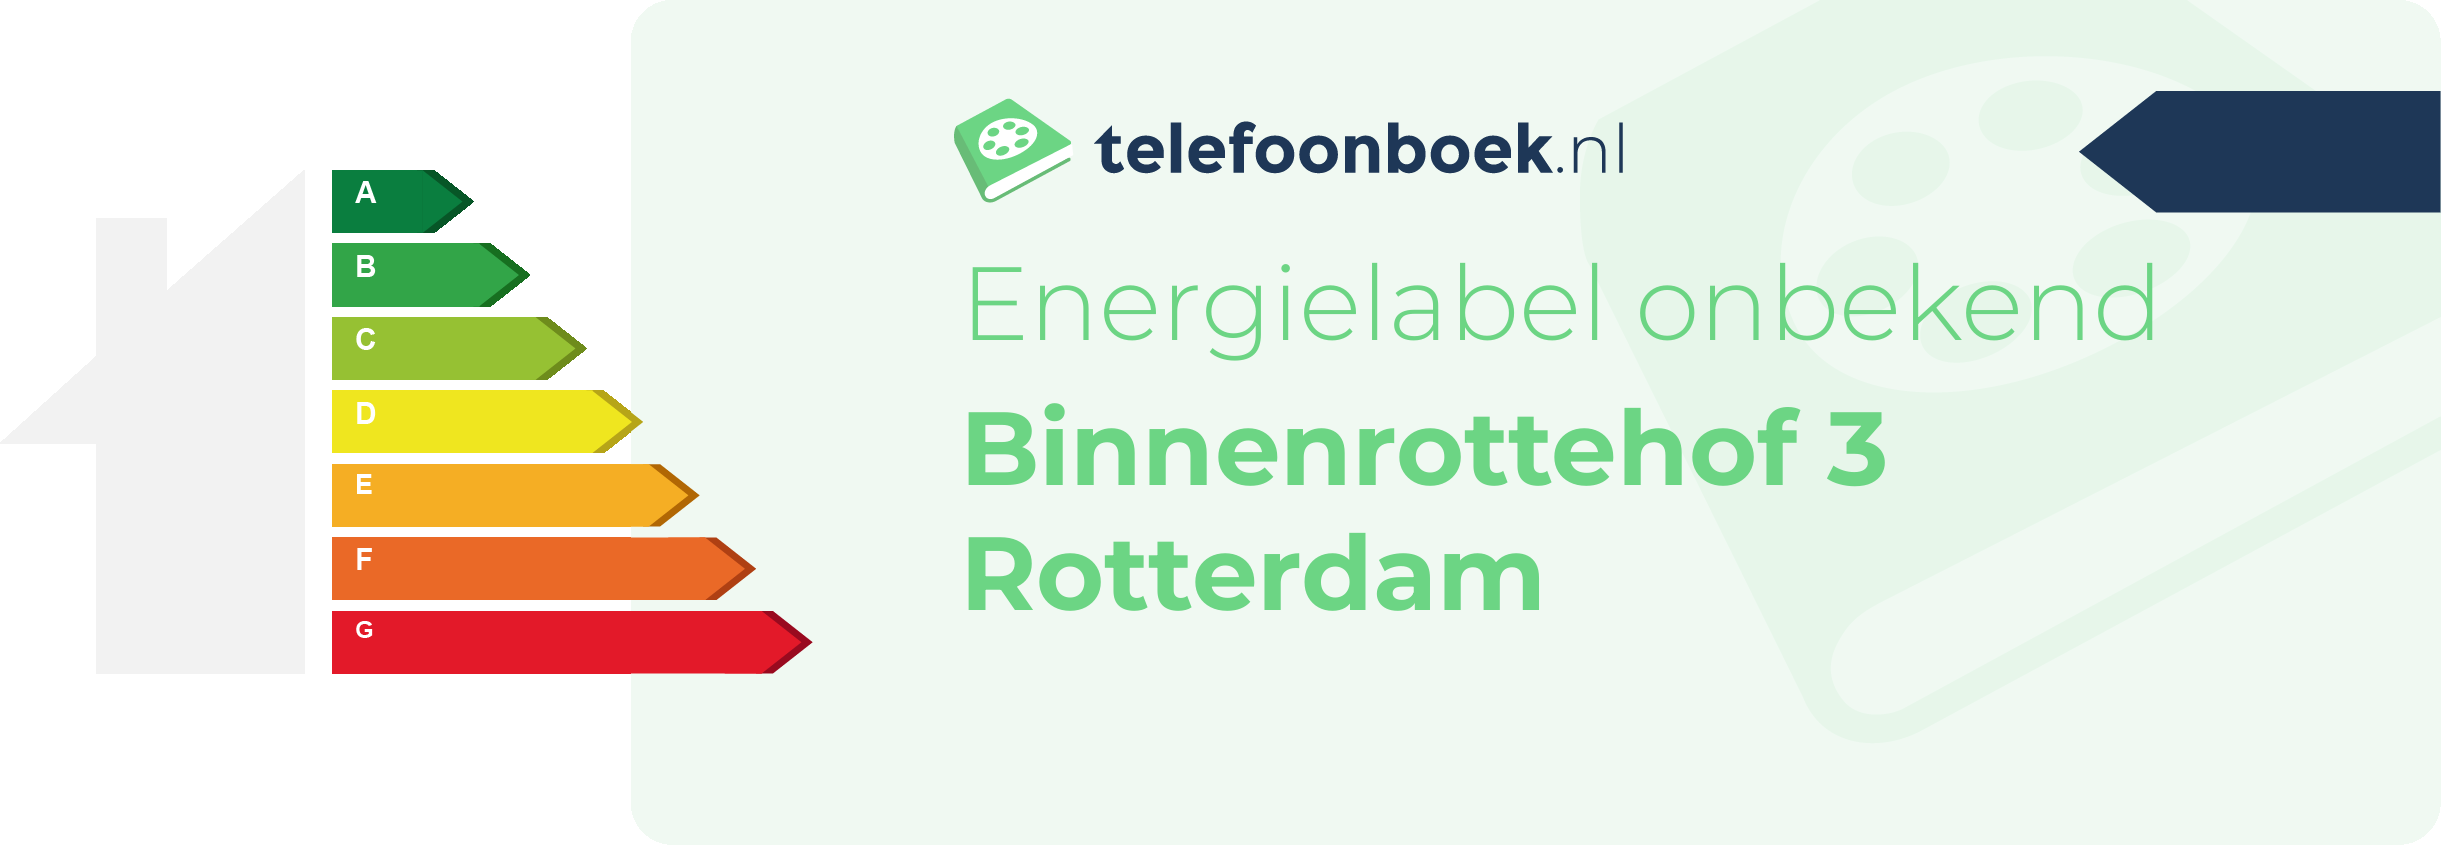 Energielabel Binnenrottehof 3 Rotterdam